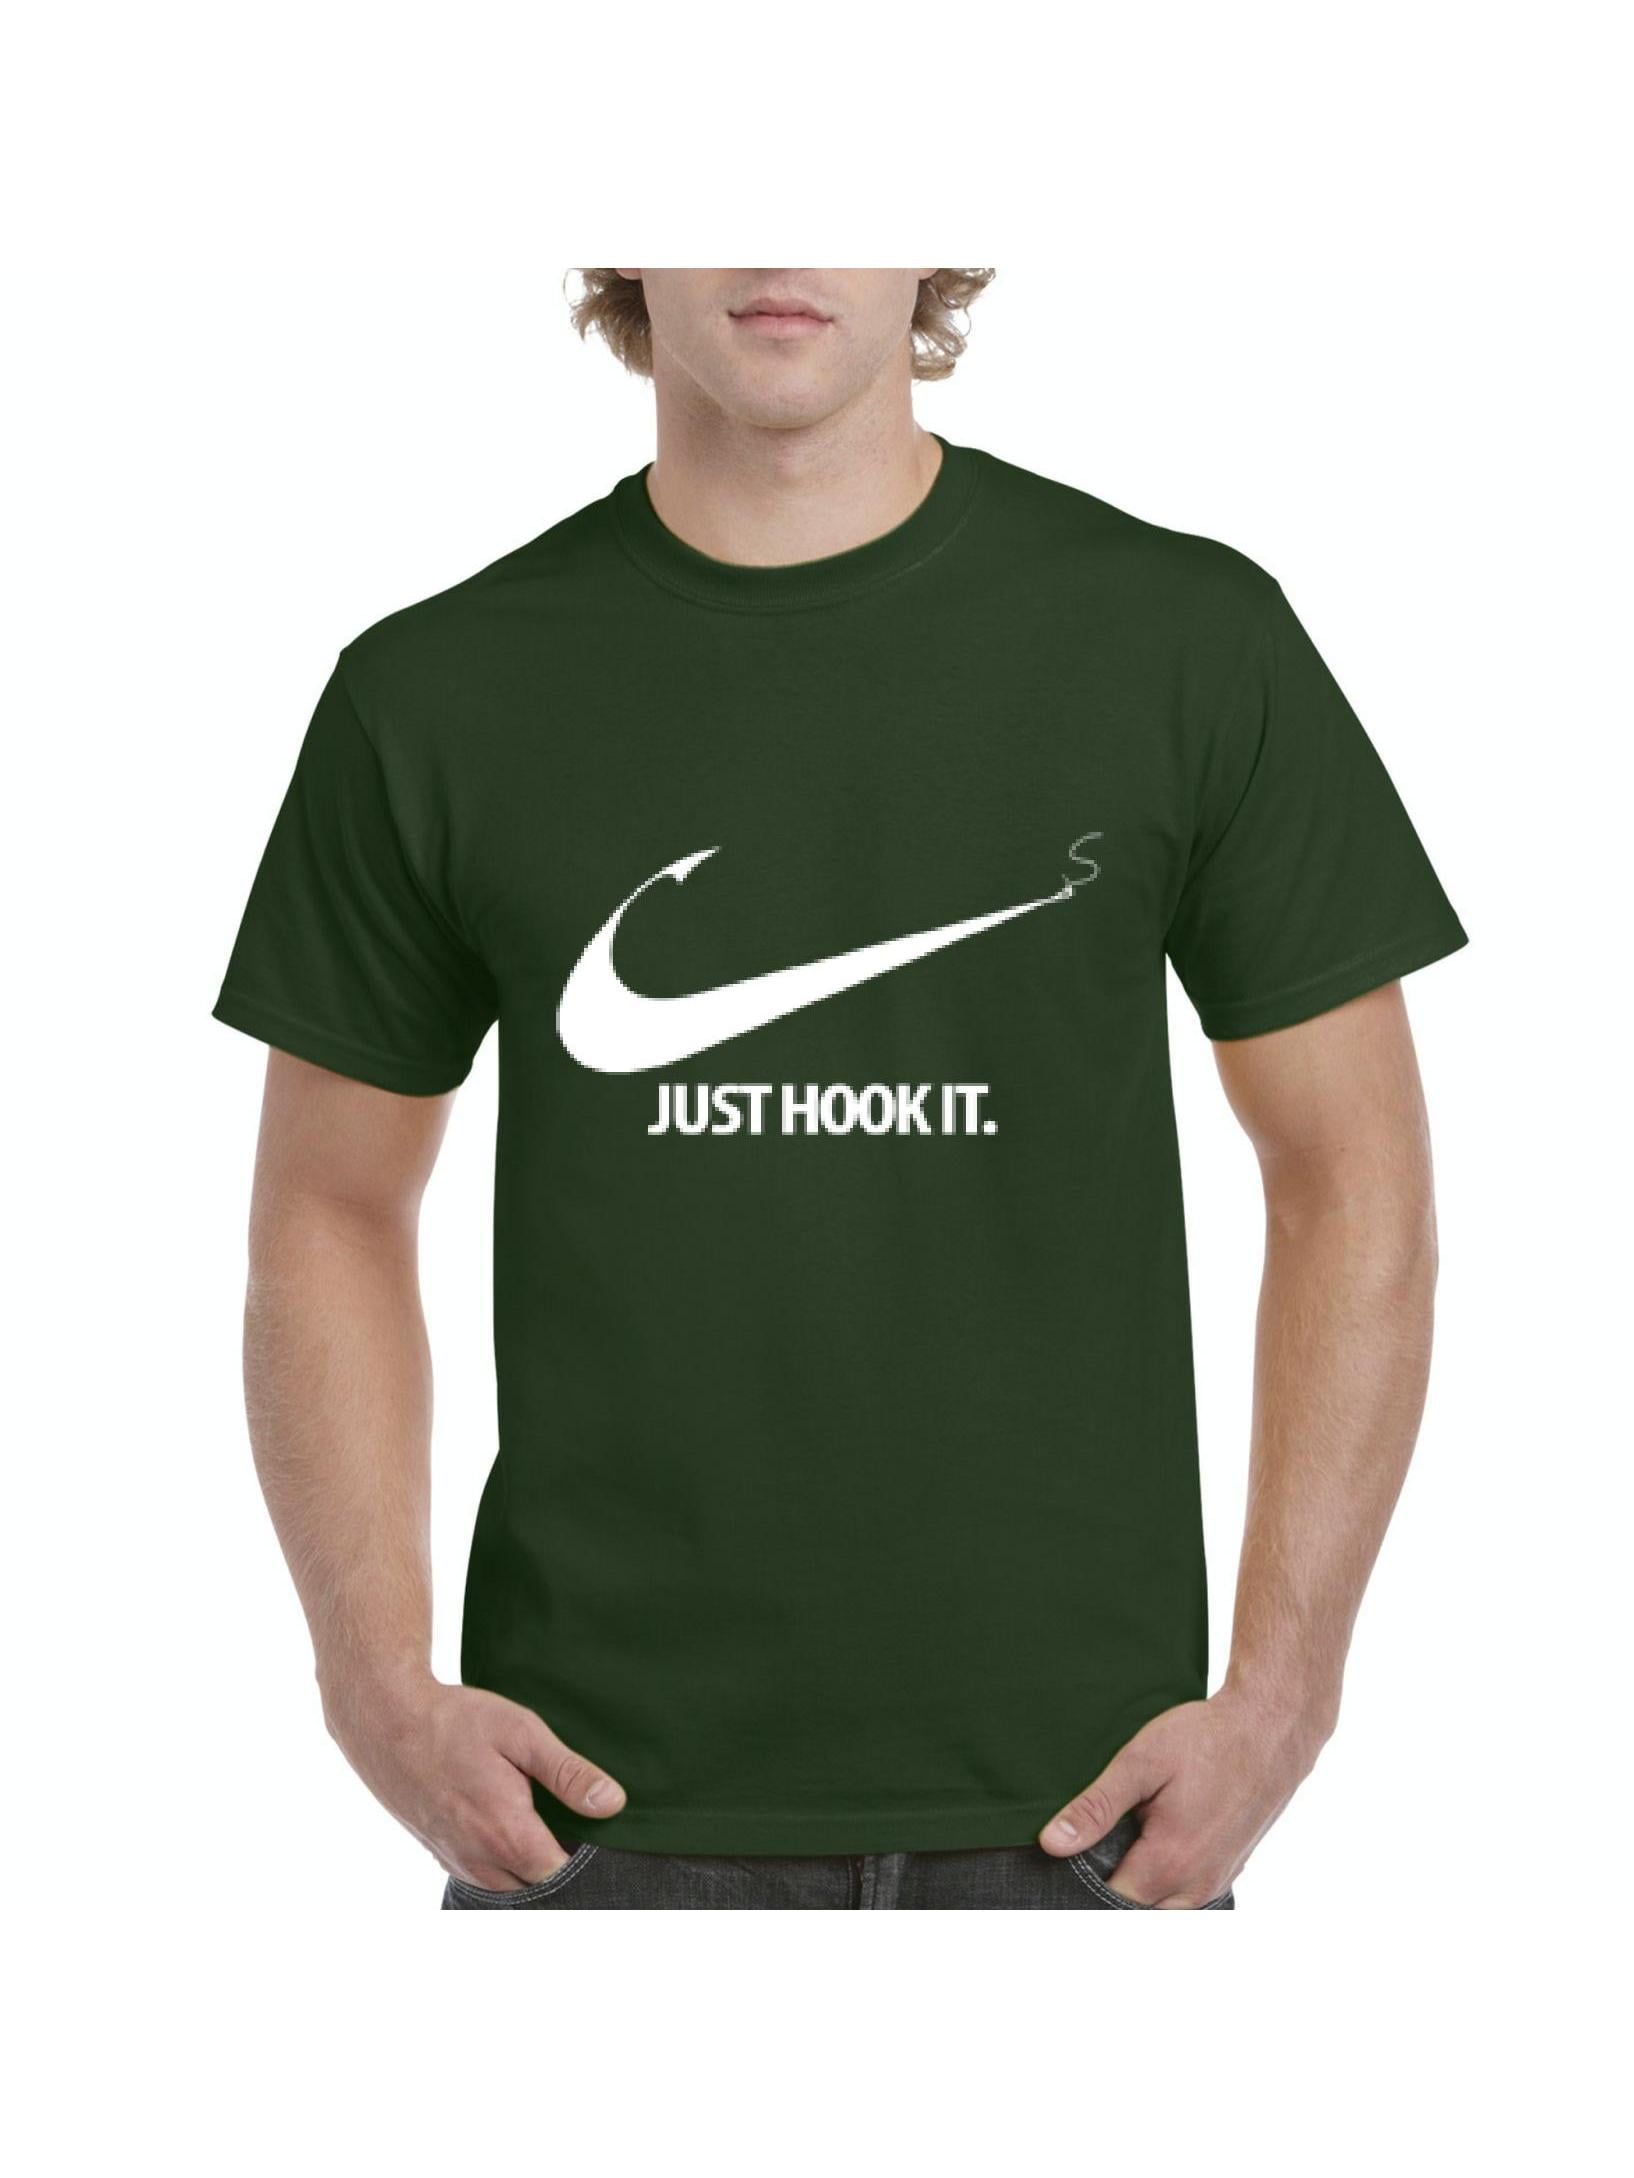 Just Hook It Tshirt -  Singapore